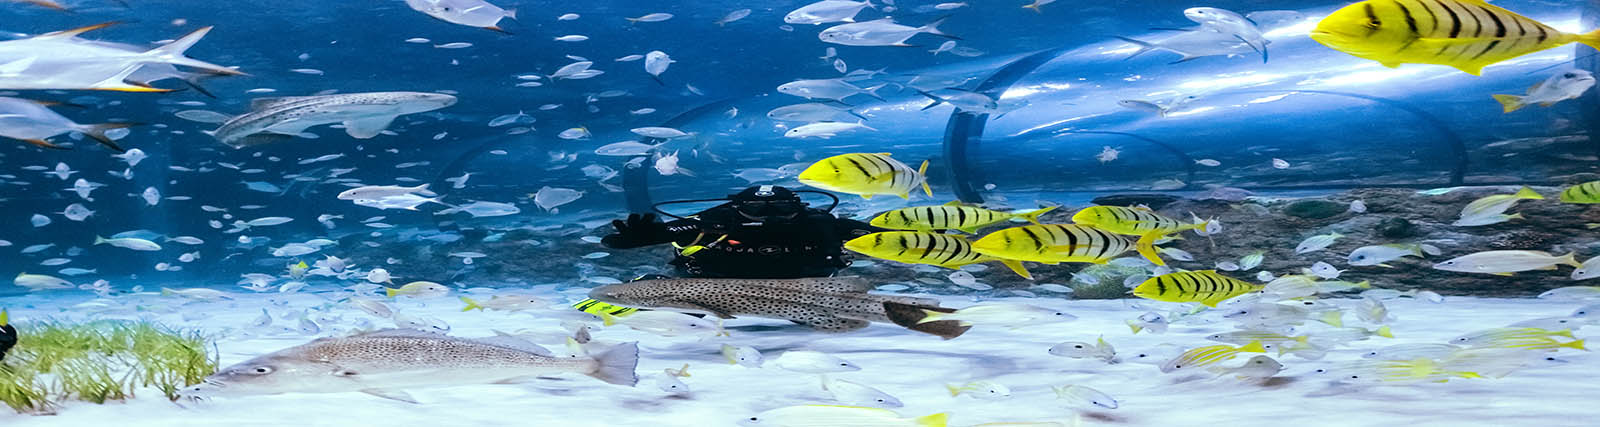 Aquarium-Abu-Dhabi-01